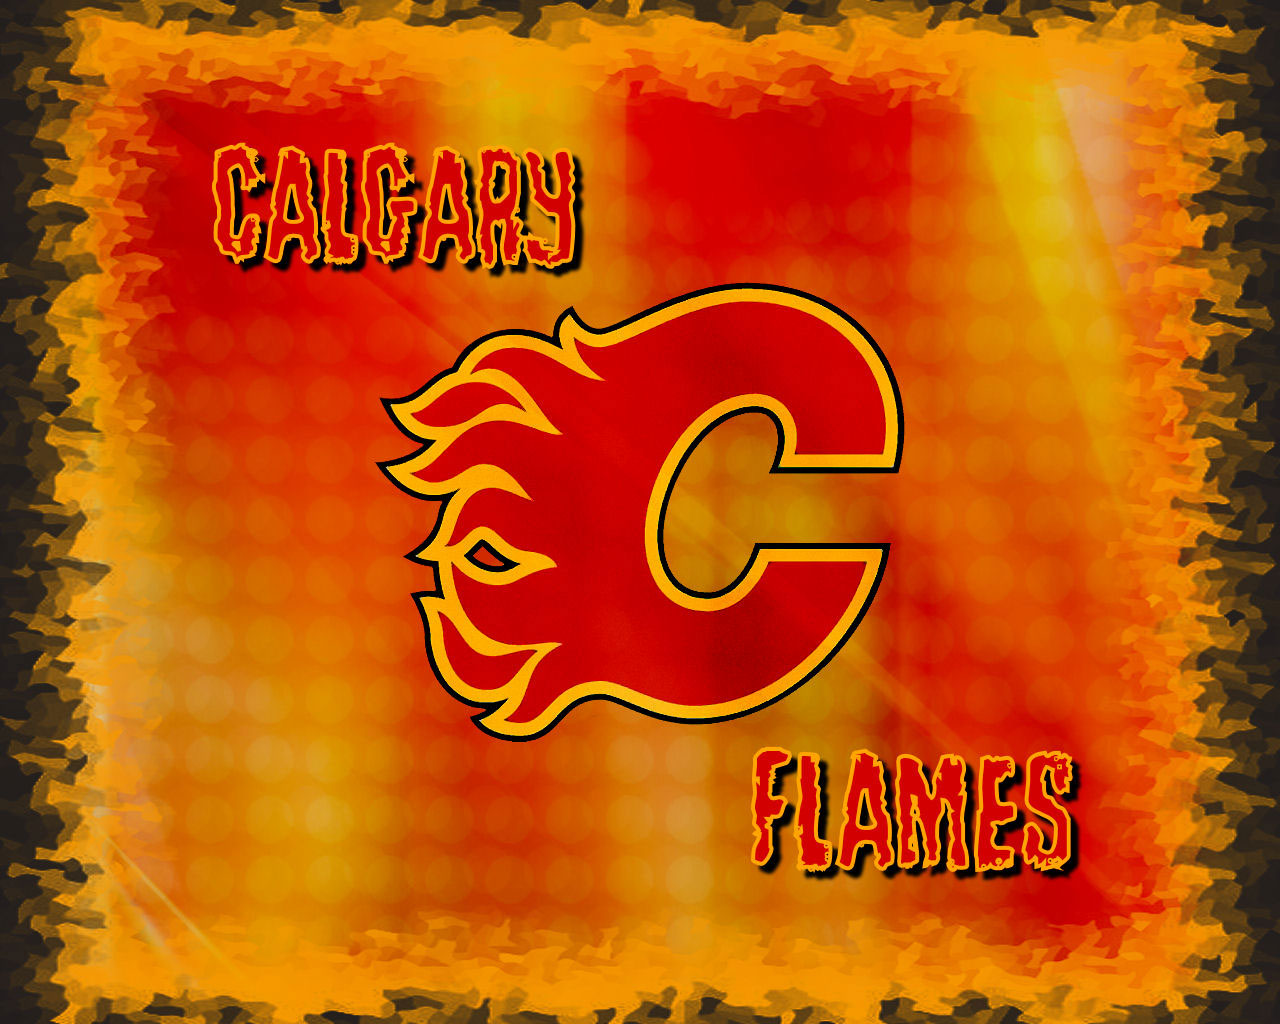 Calgary Flames, Ice Hockey, Wallpaper - Calgary Flames Vs St Louis Blues - HD Wallpaper 